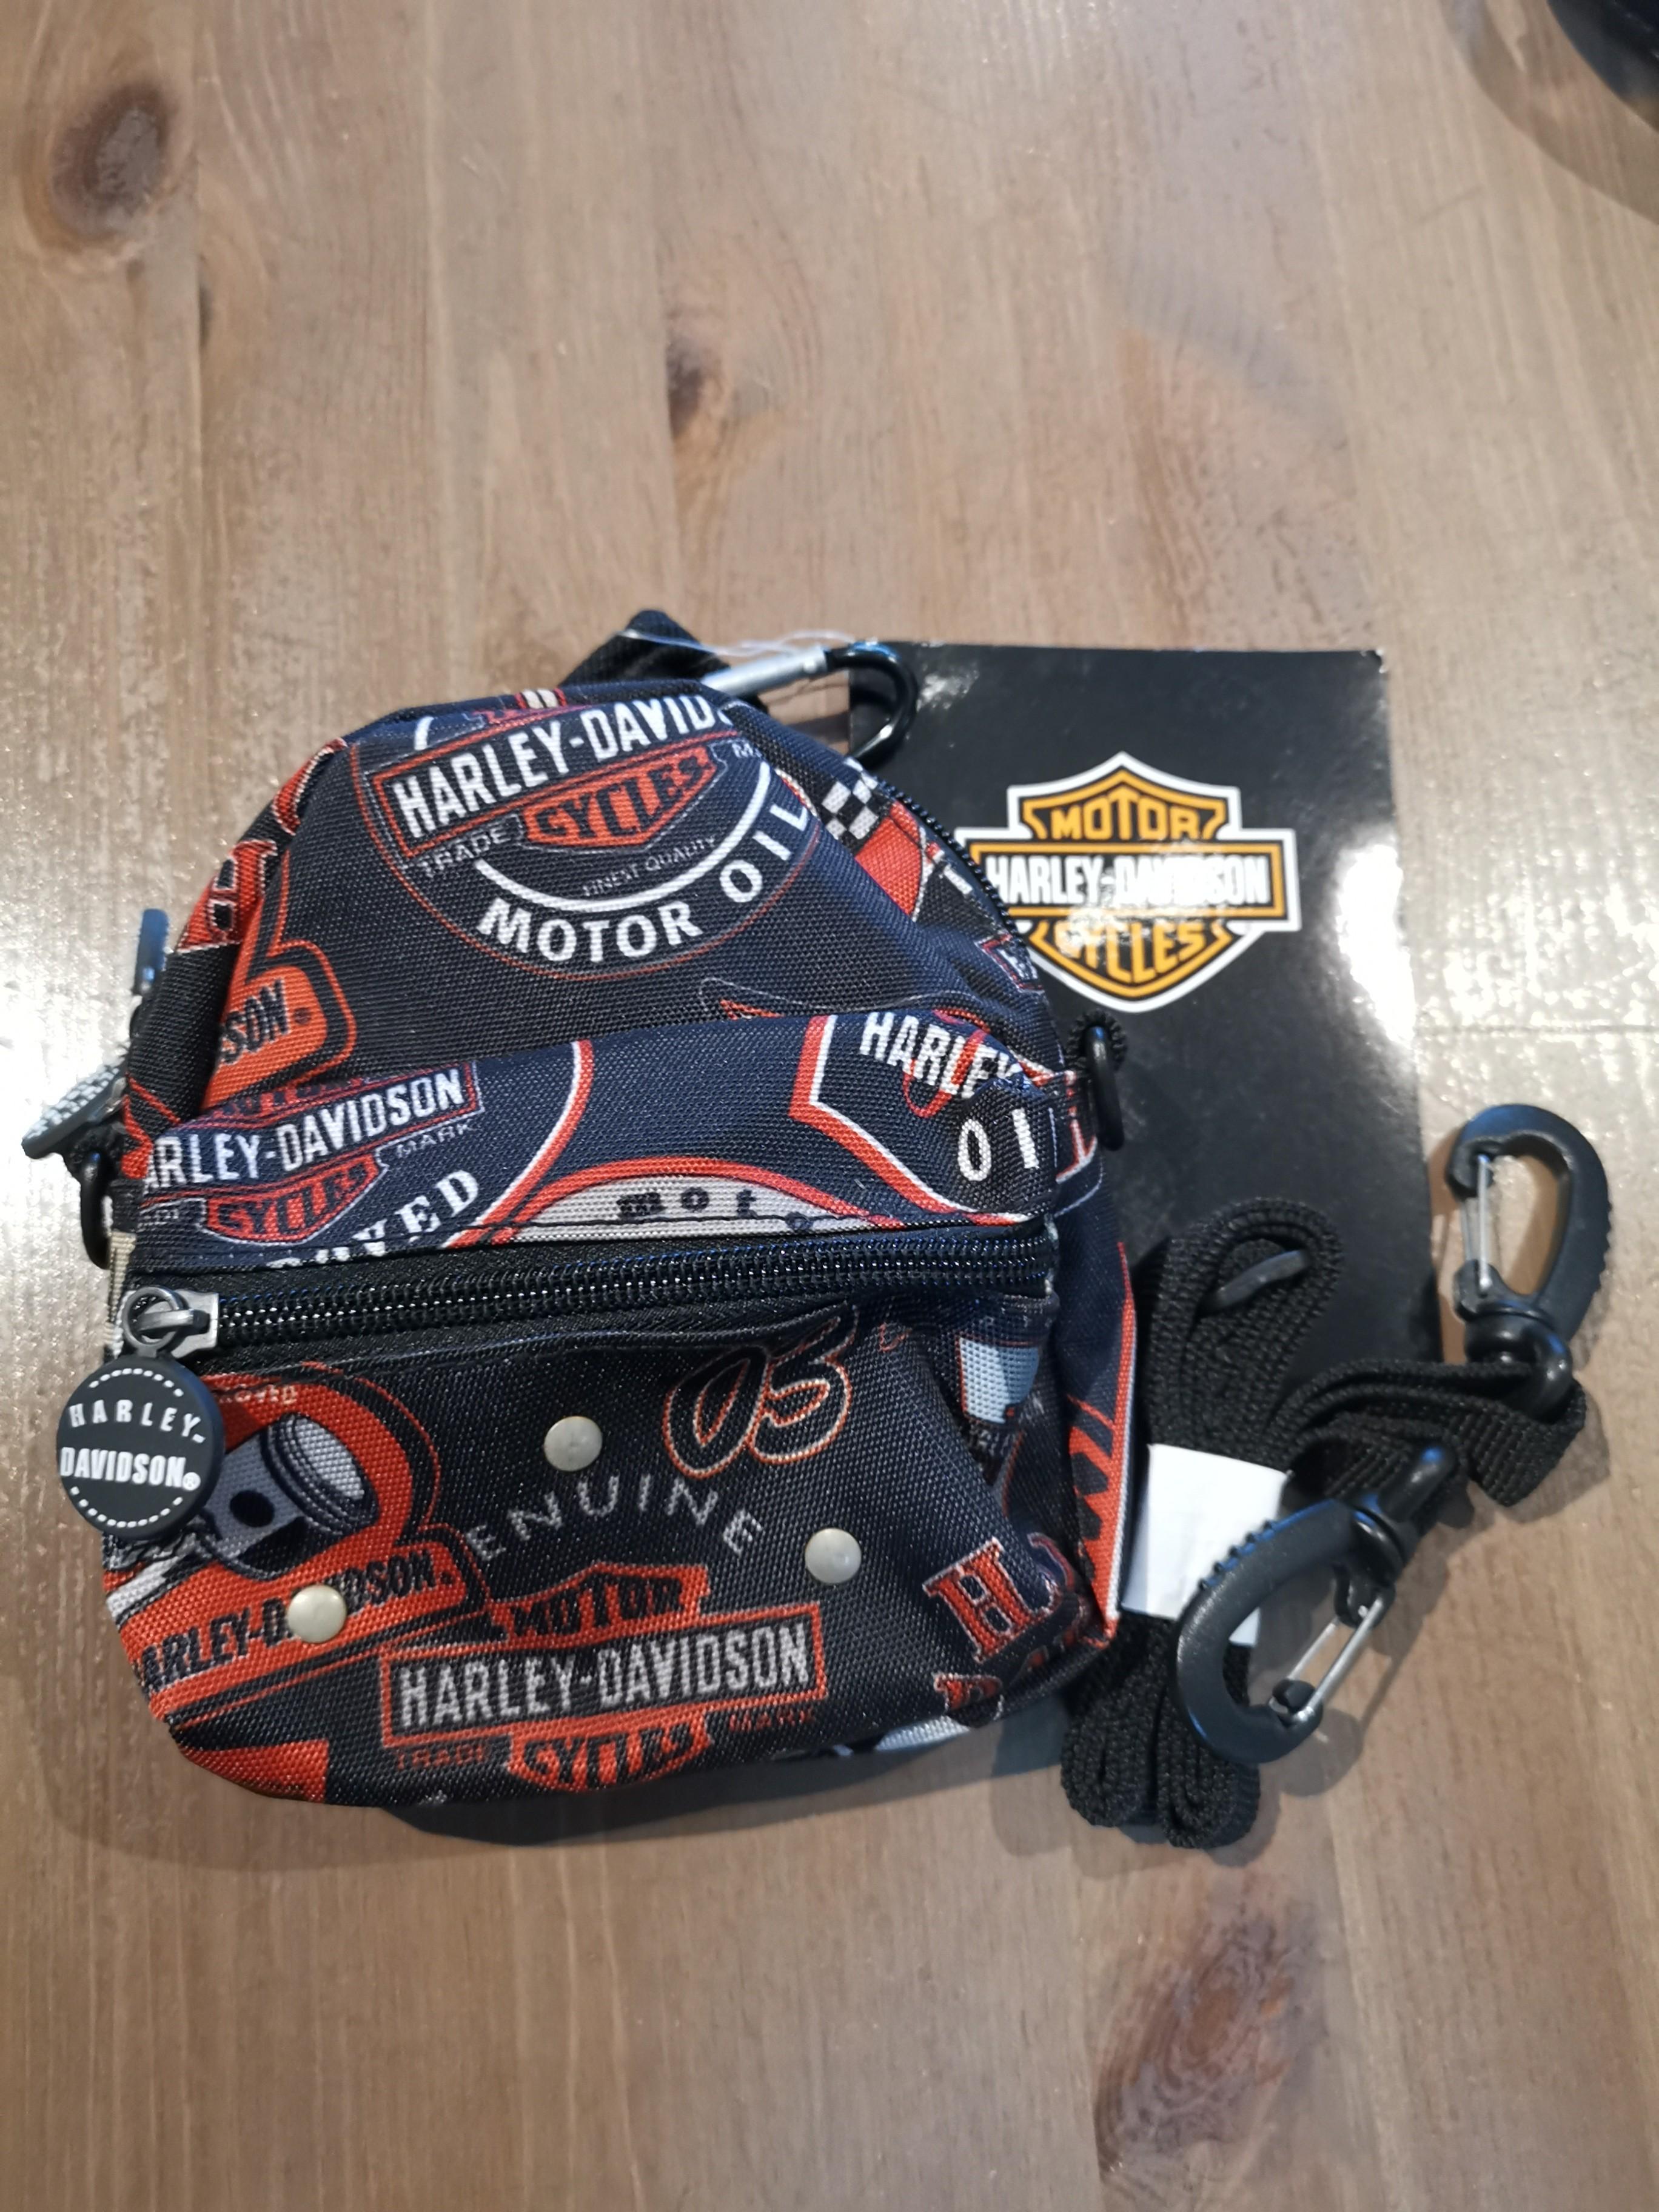 Harley-Davidson Bag Charm Crossbody Bags for Women